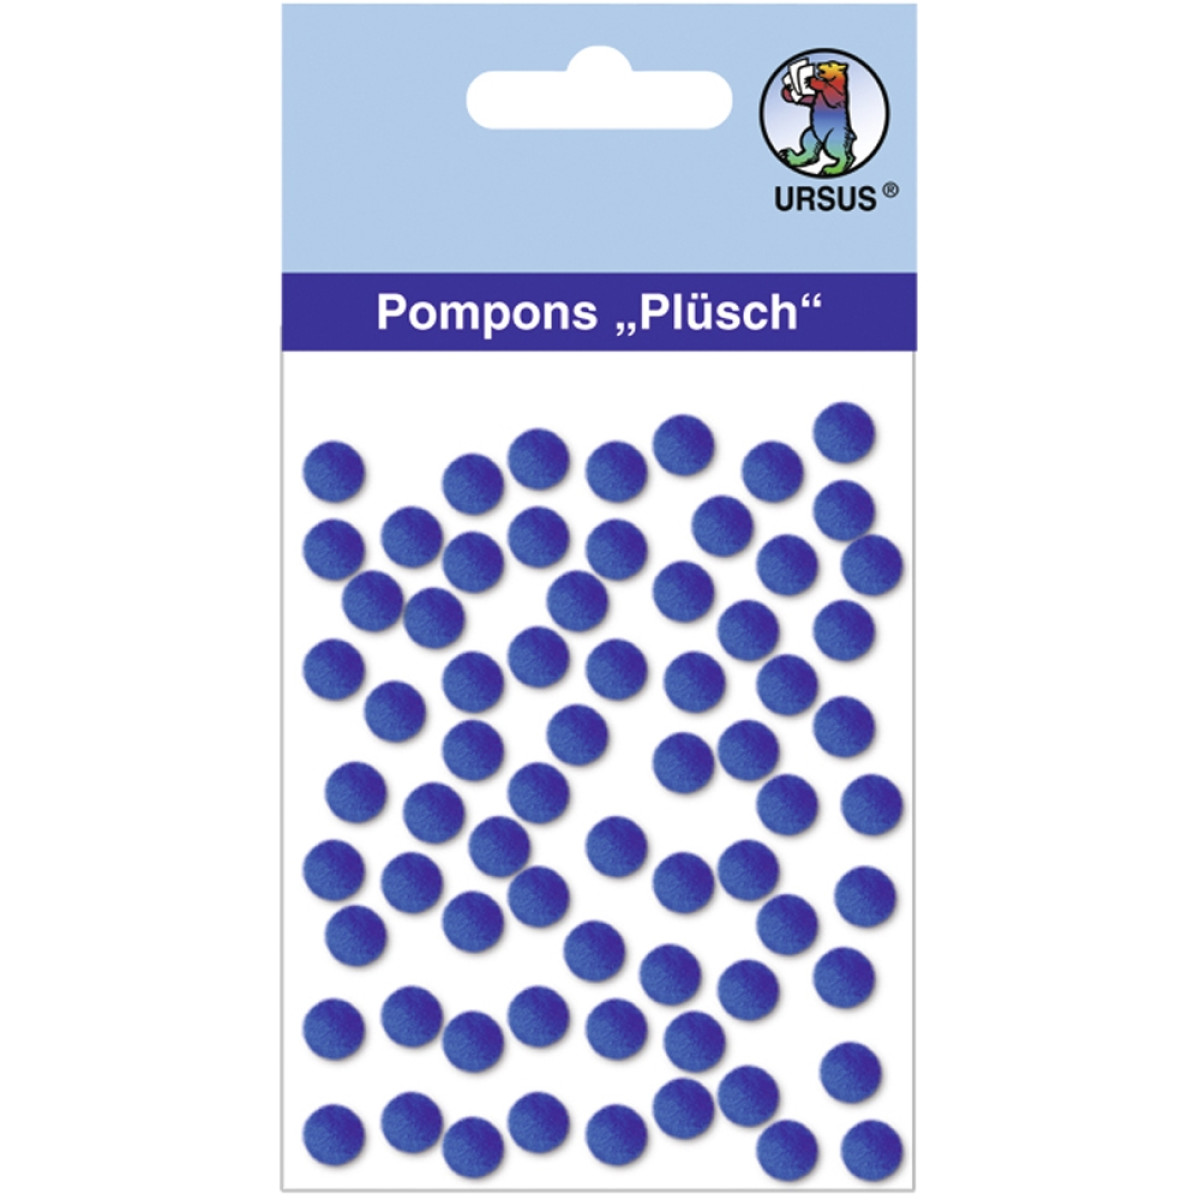 Pompons "Plüsch" 7 mm dunkelblau